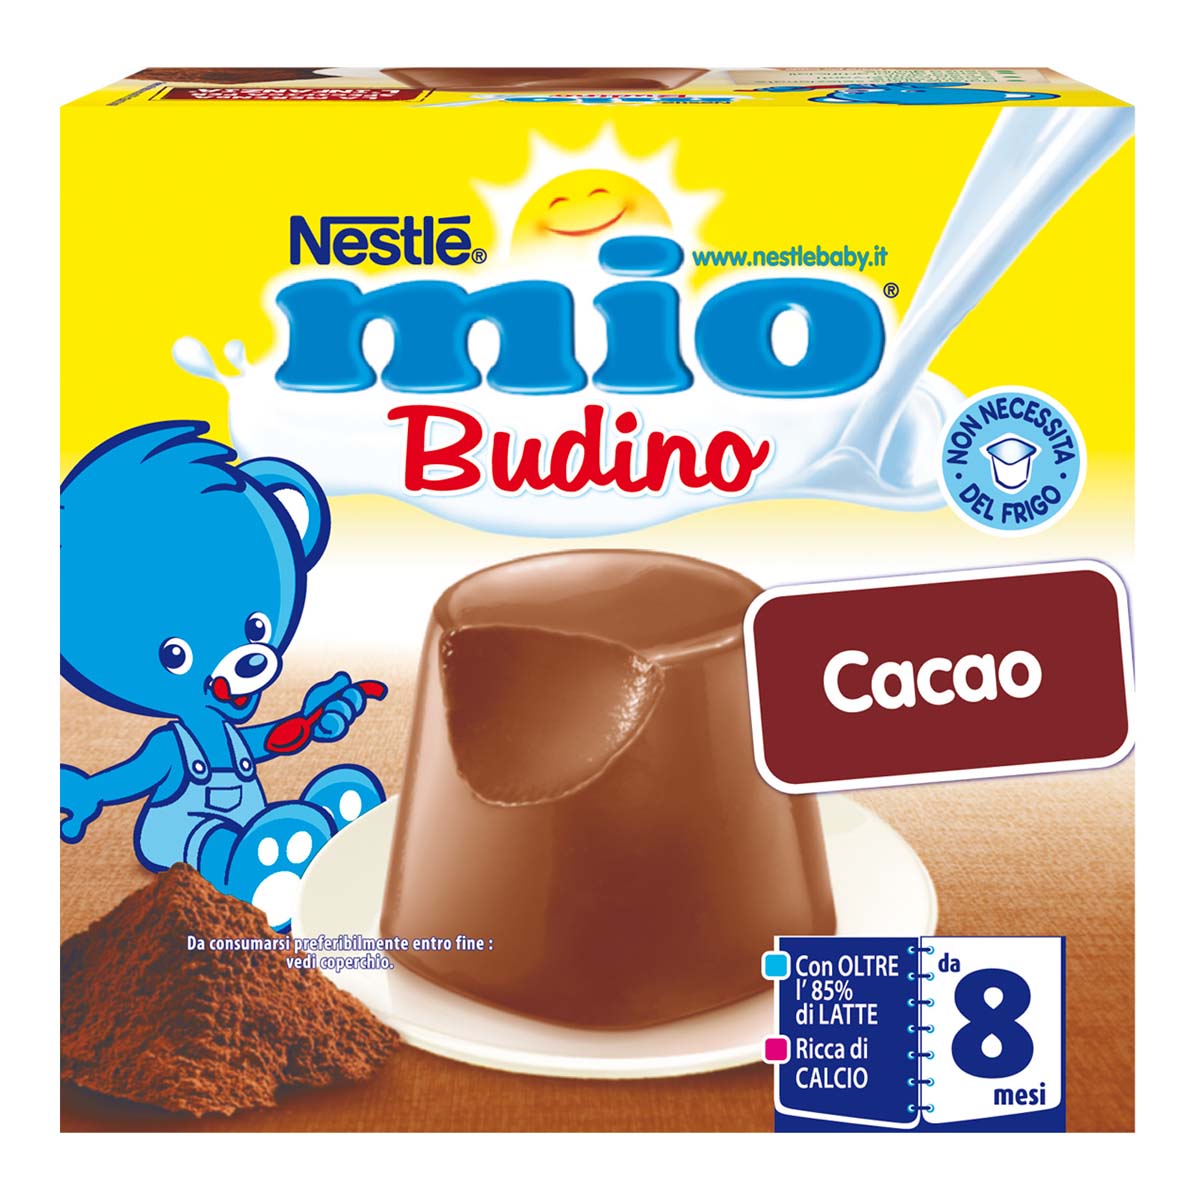 Nestlé mio budino cacao da 8 mesi senza glutine 4 vasetti plastica da 100g - Nestlé